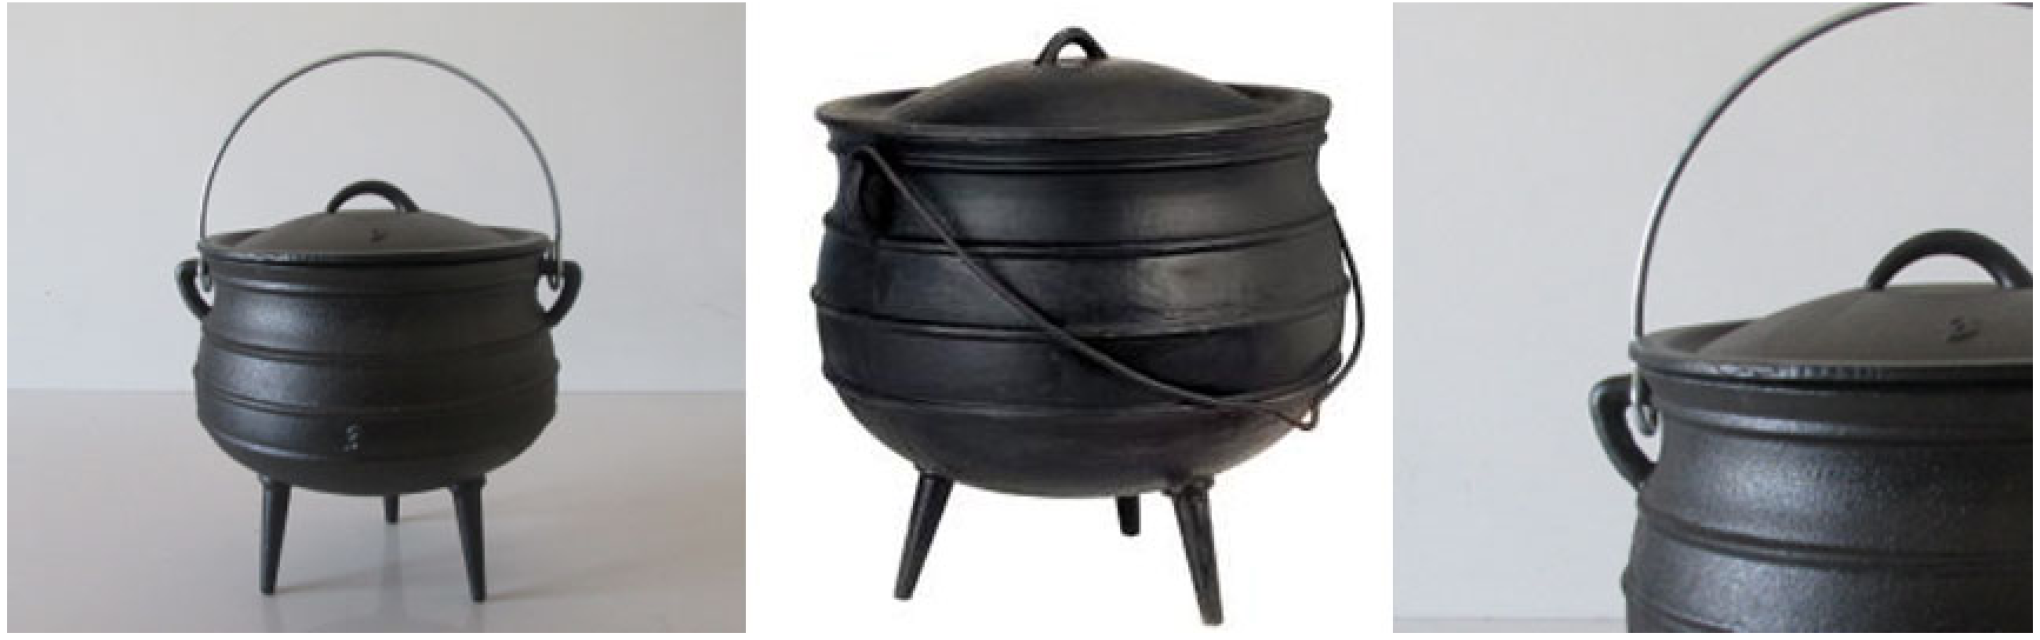 Outdoor Cast Iron Cookware Three Legs Potjie Pot - Durable and Versatile Cooking Pot